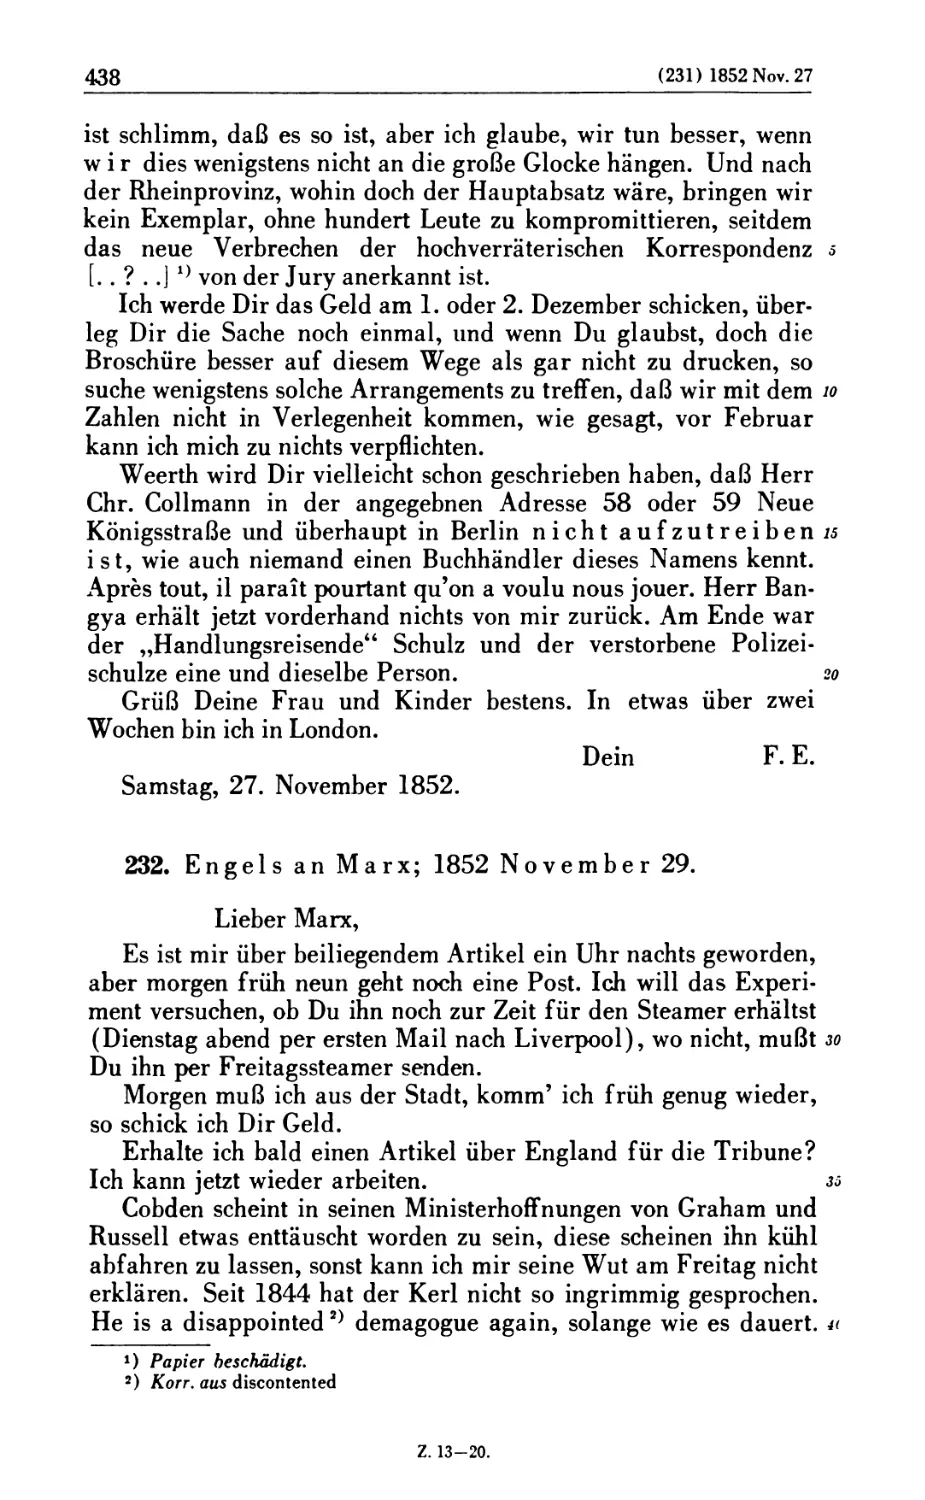 232. Engels an Marx; 1852 November 29